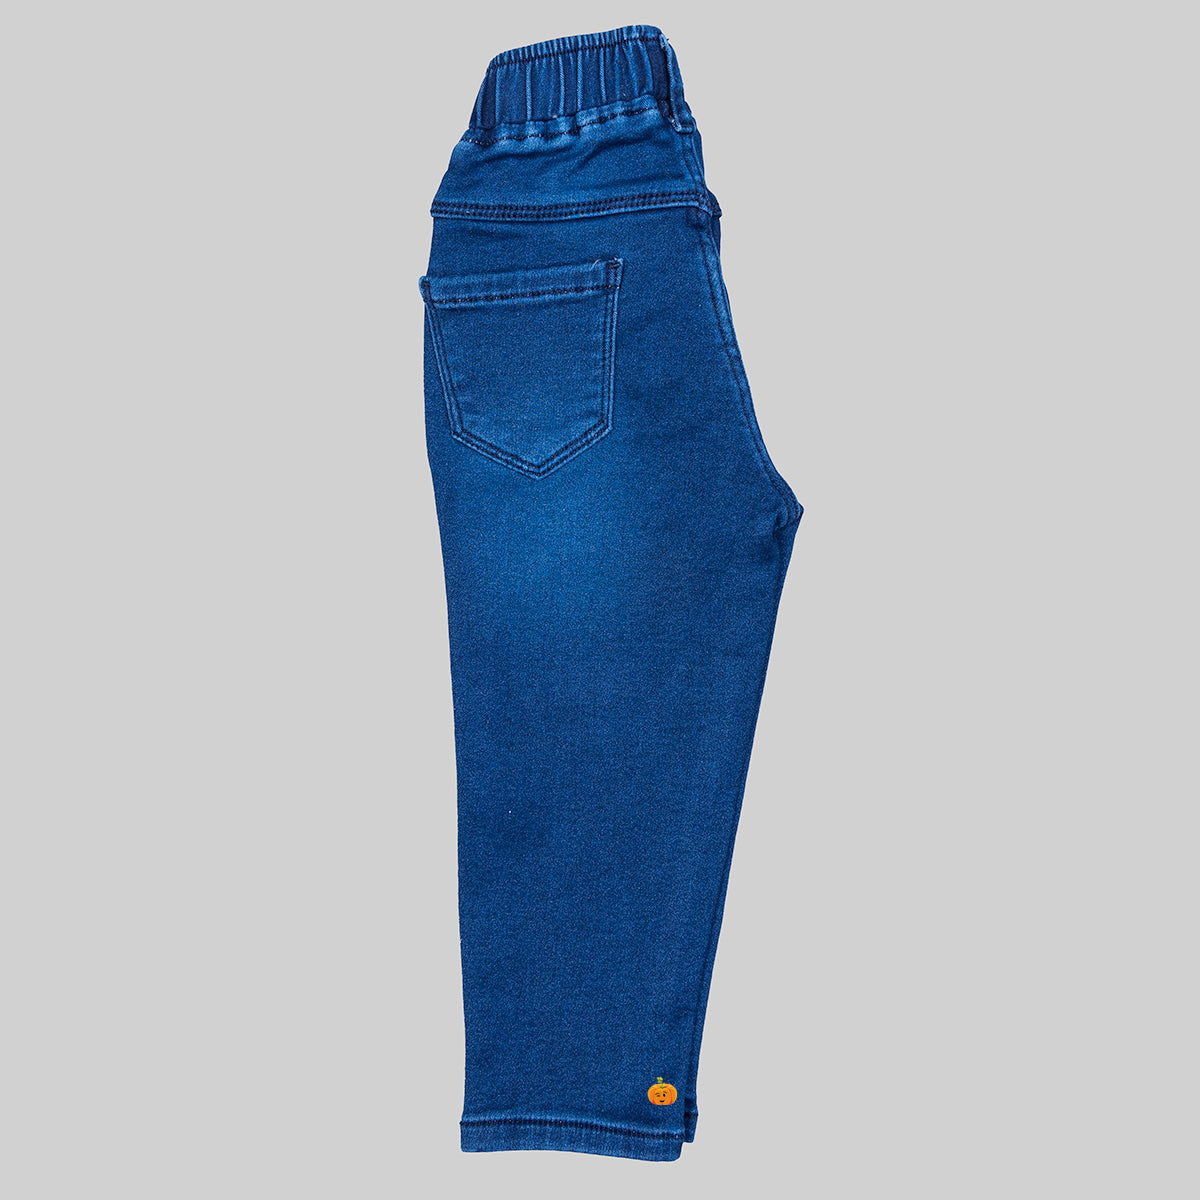 White Girls' Jeans | Dillard's